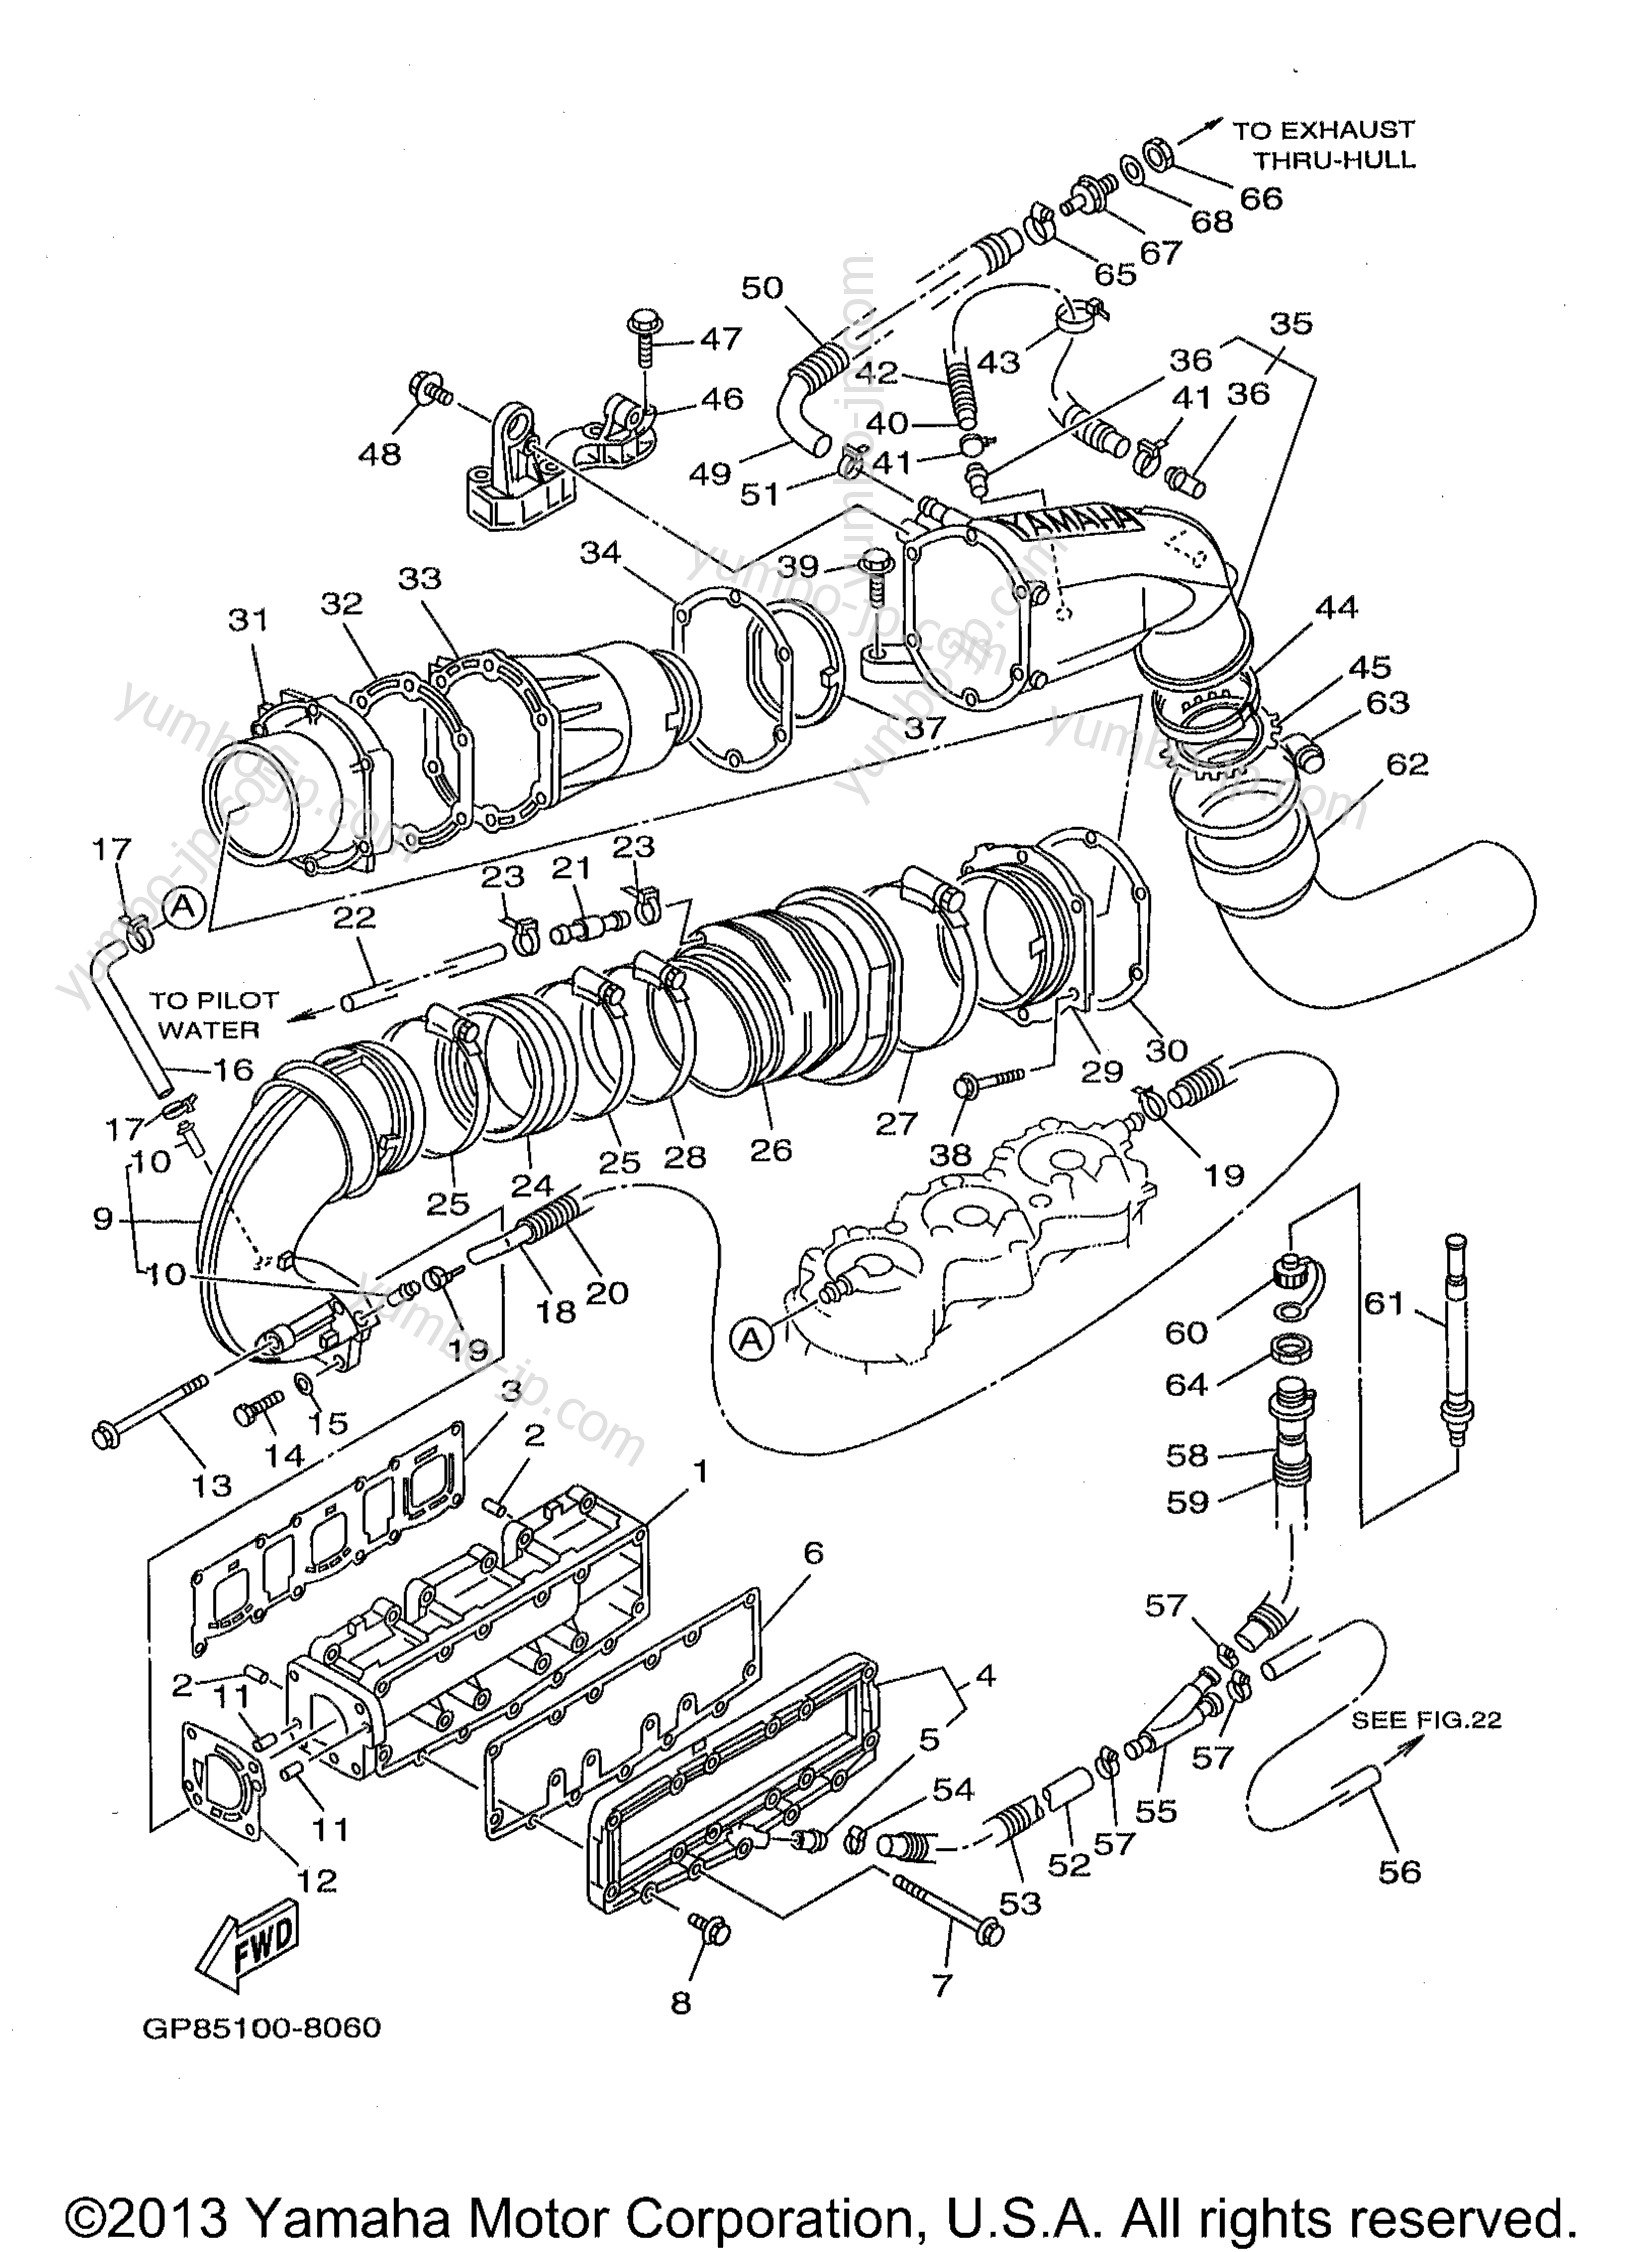 Exhaust 1 для гидроциклов YAMAHA WAVE RUNNER GP1200 (GP1200W) 1998 г.